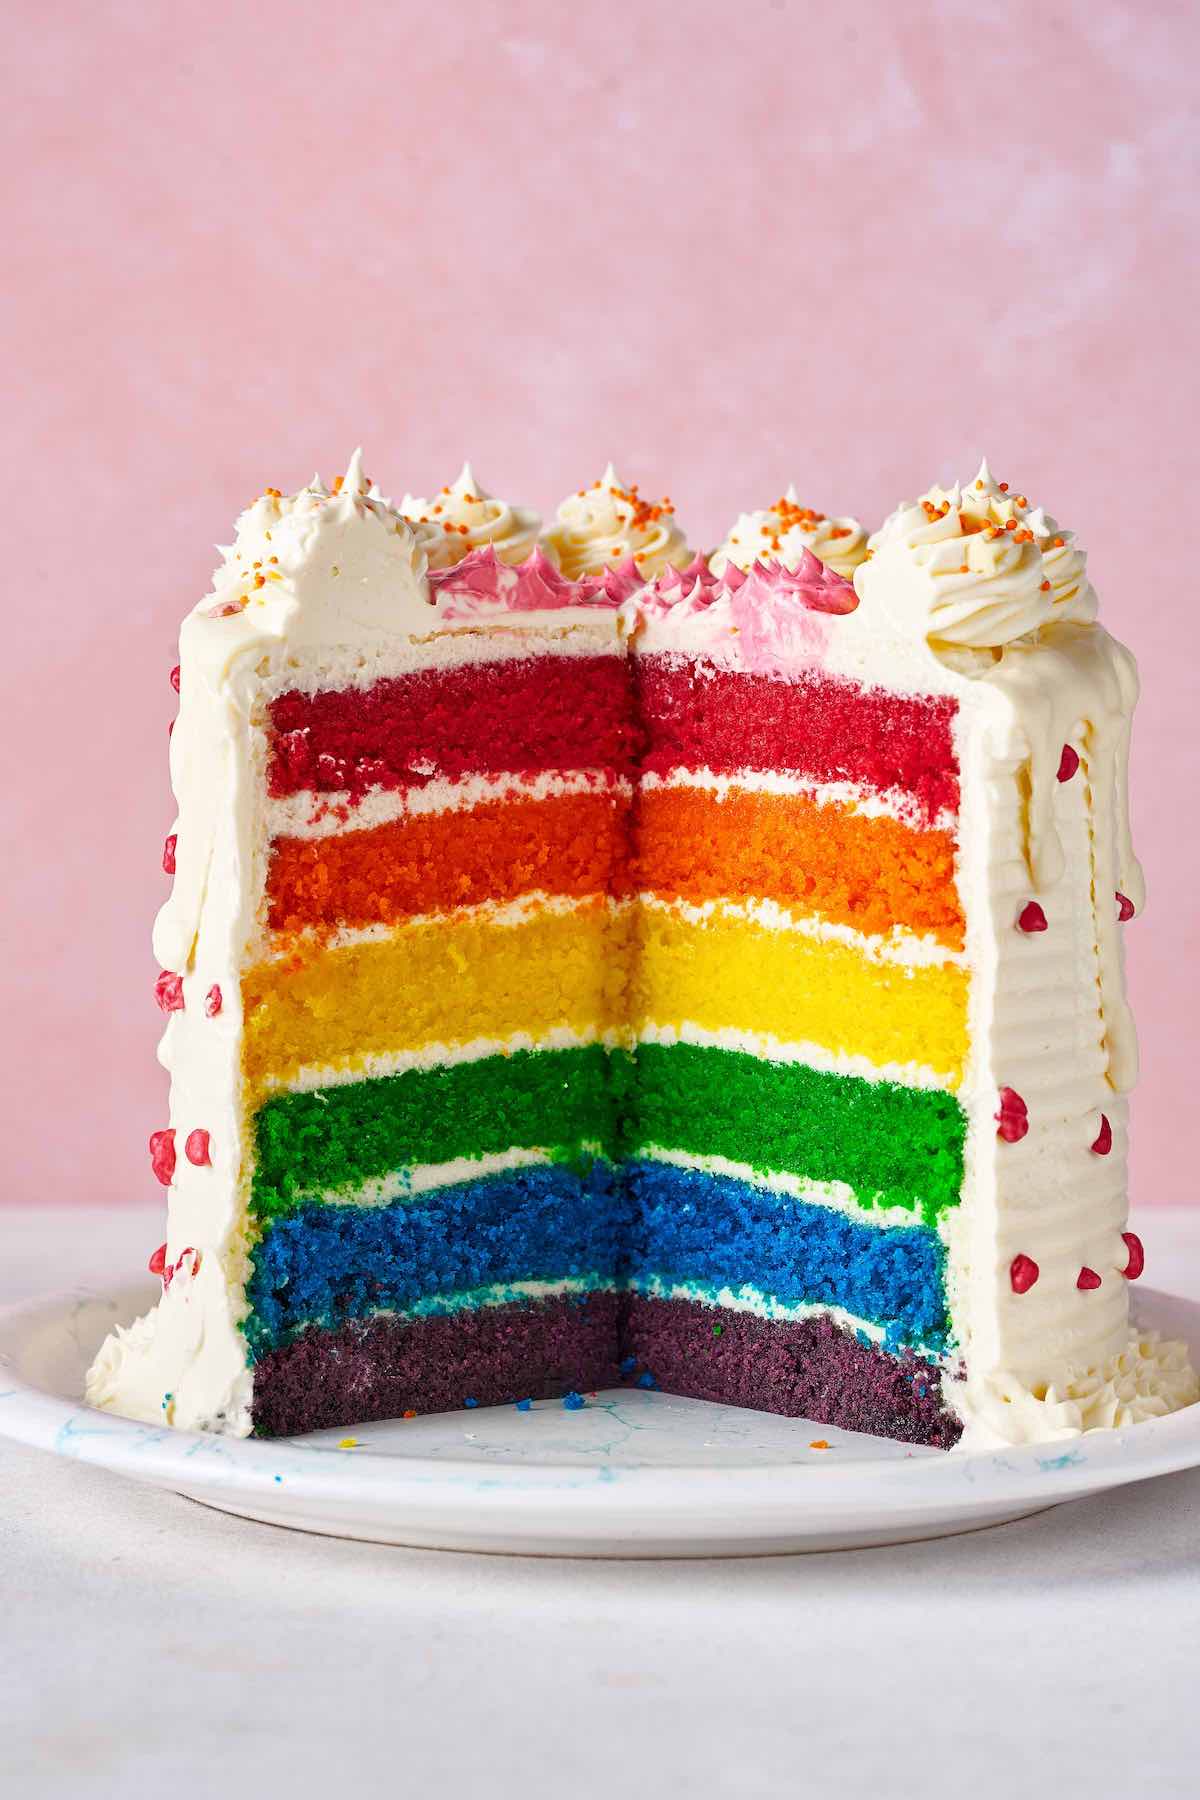 rainbow cake.